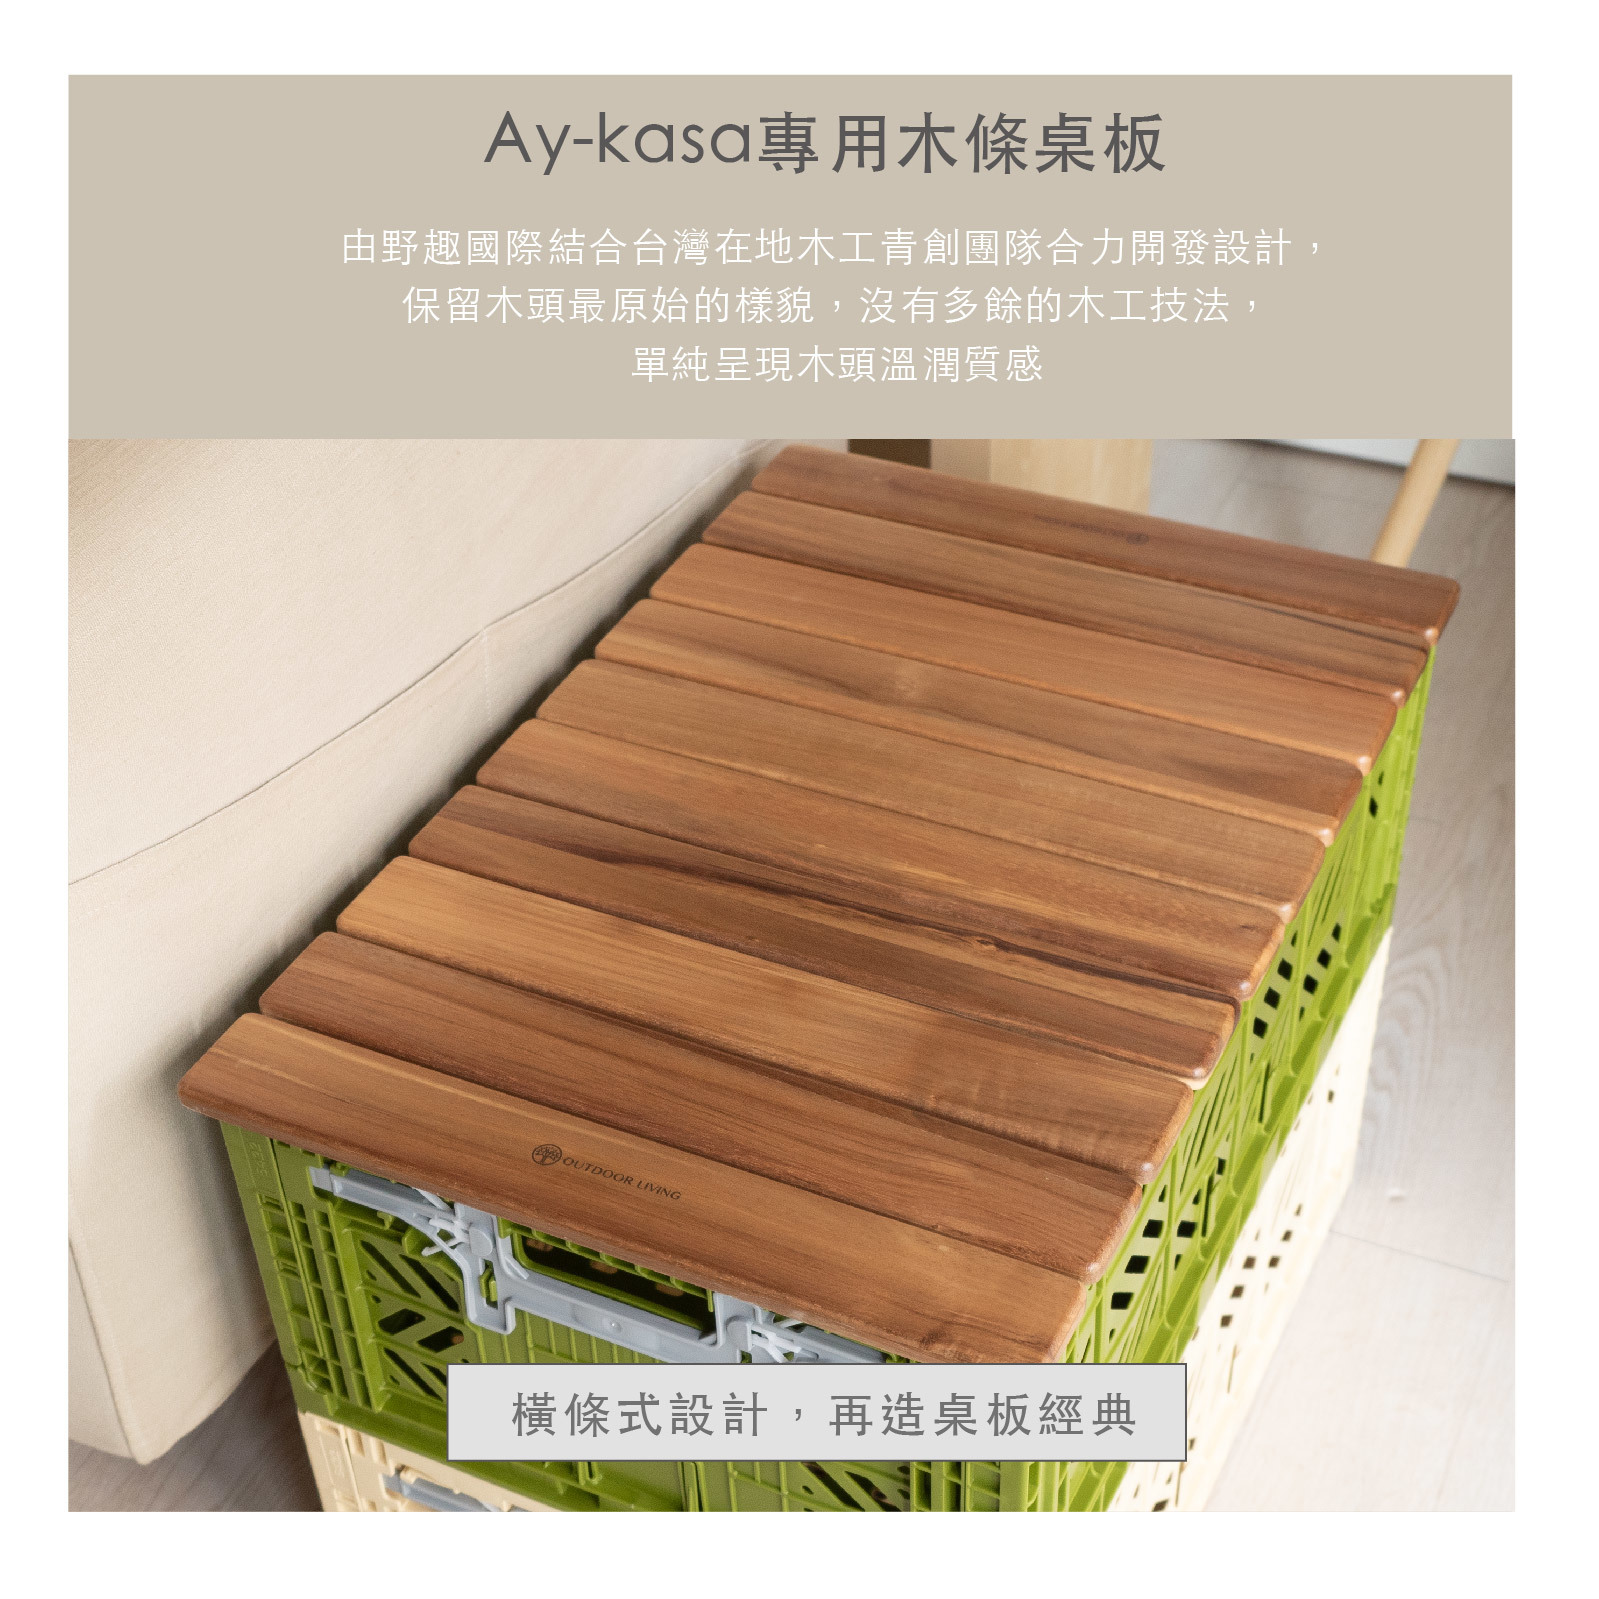 AyKasa專屬實木桌板- 楓木